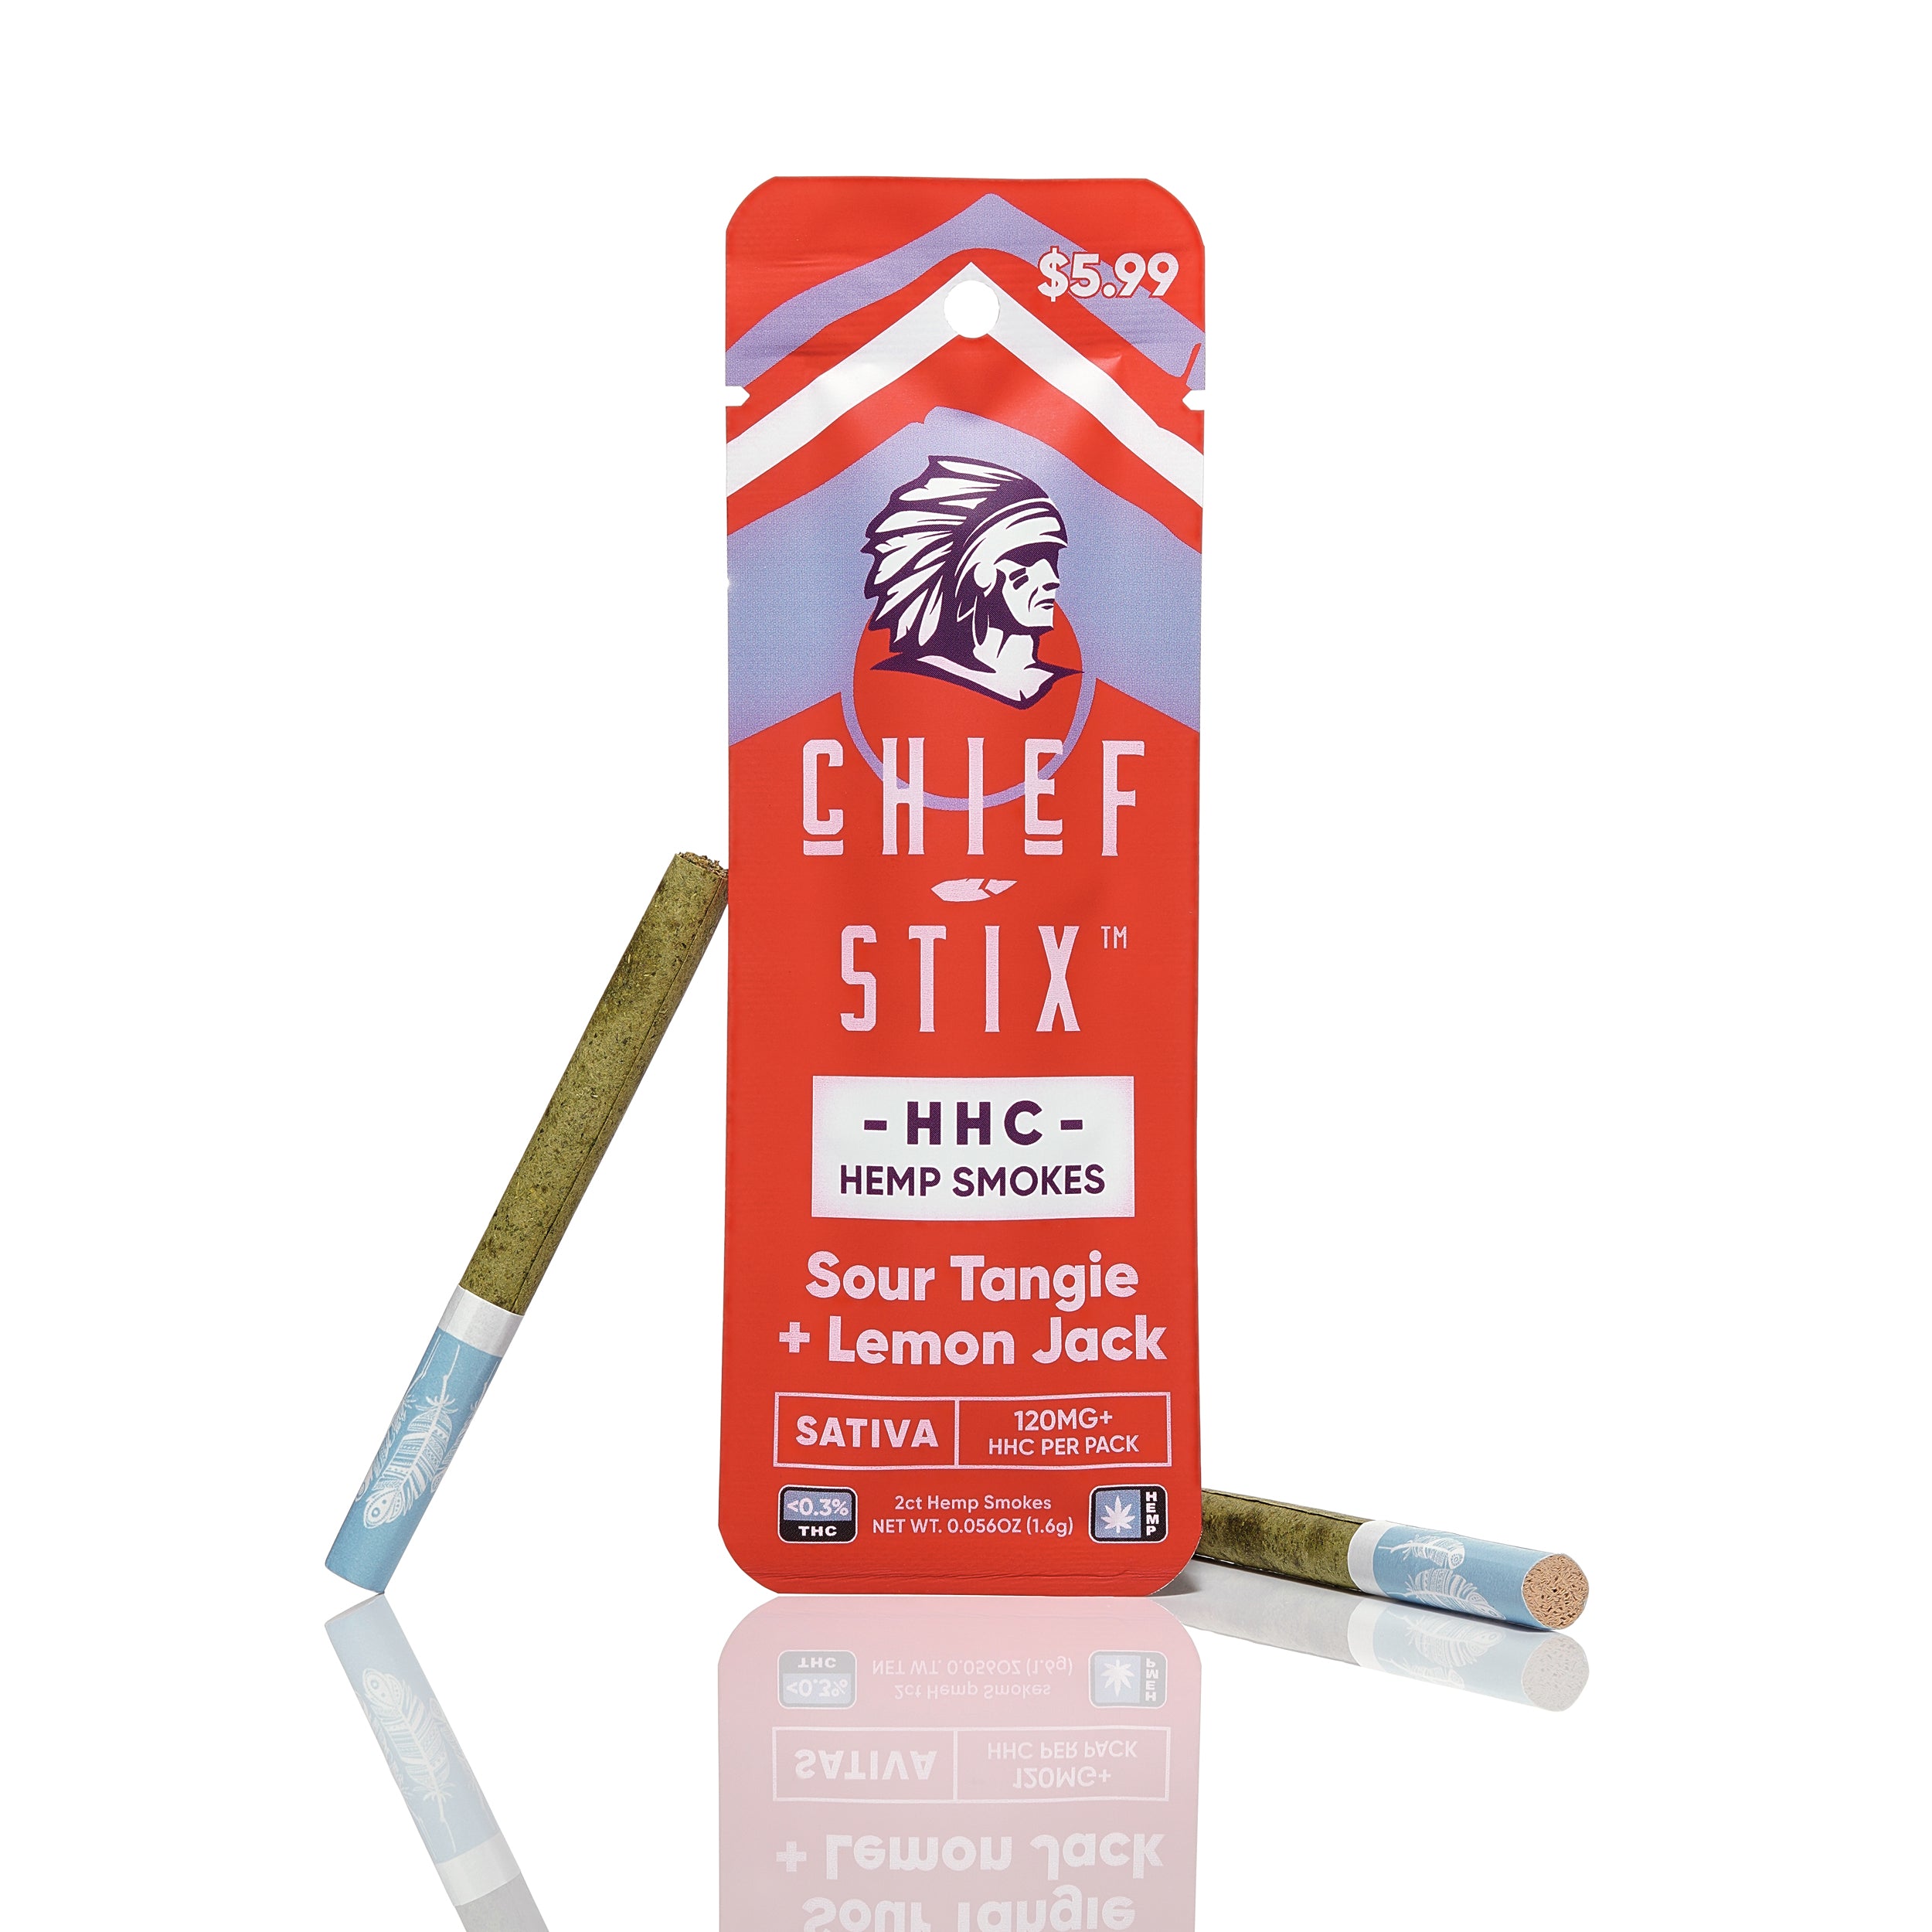 Chief Stix HHC Hemp Smokes 2ct Pouch Container Tub (45ct)